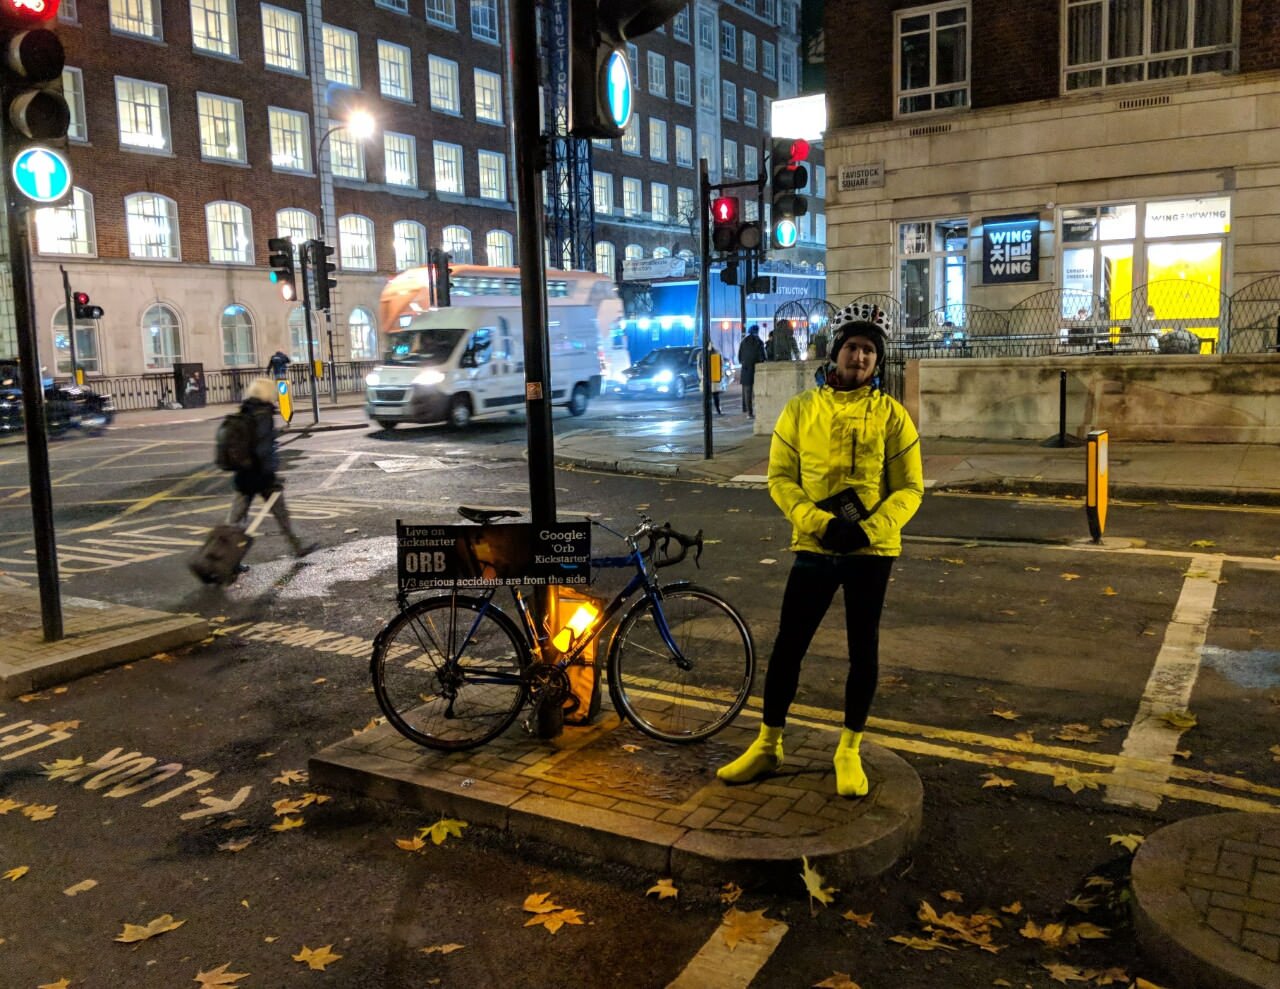 the orb bike light